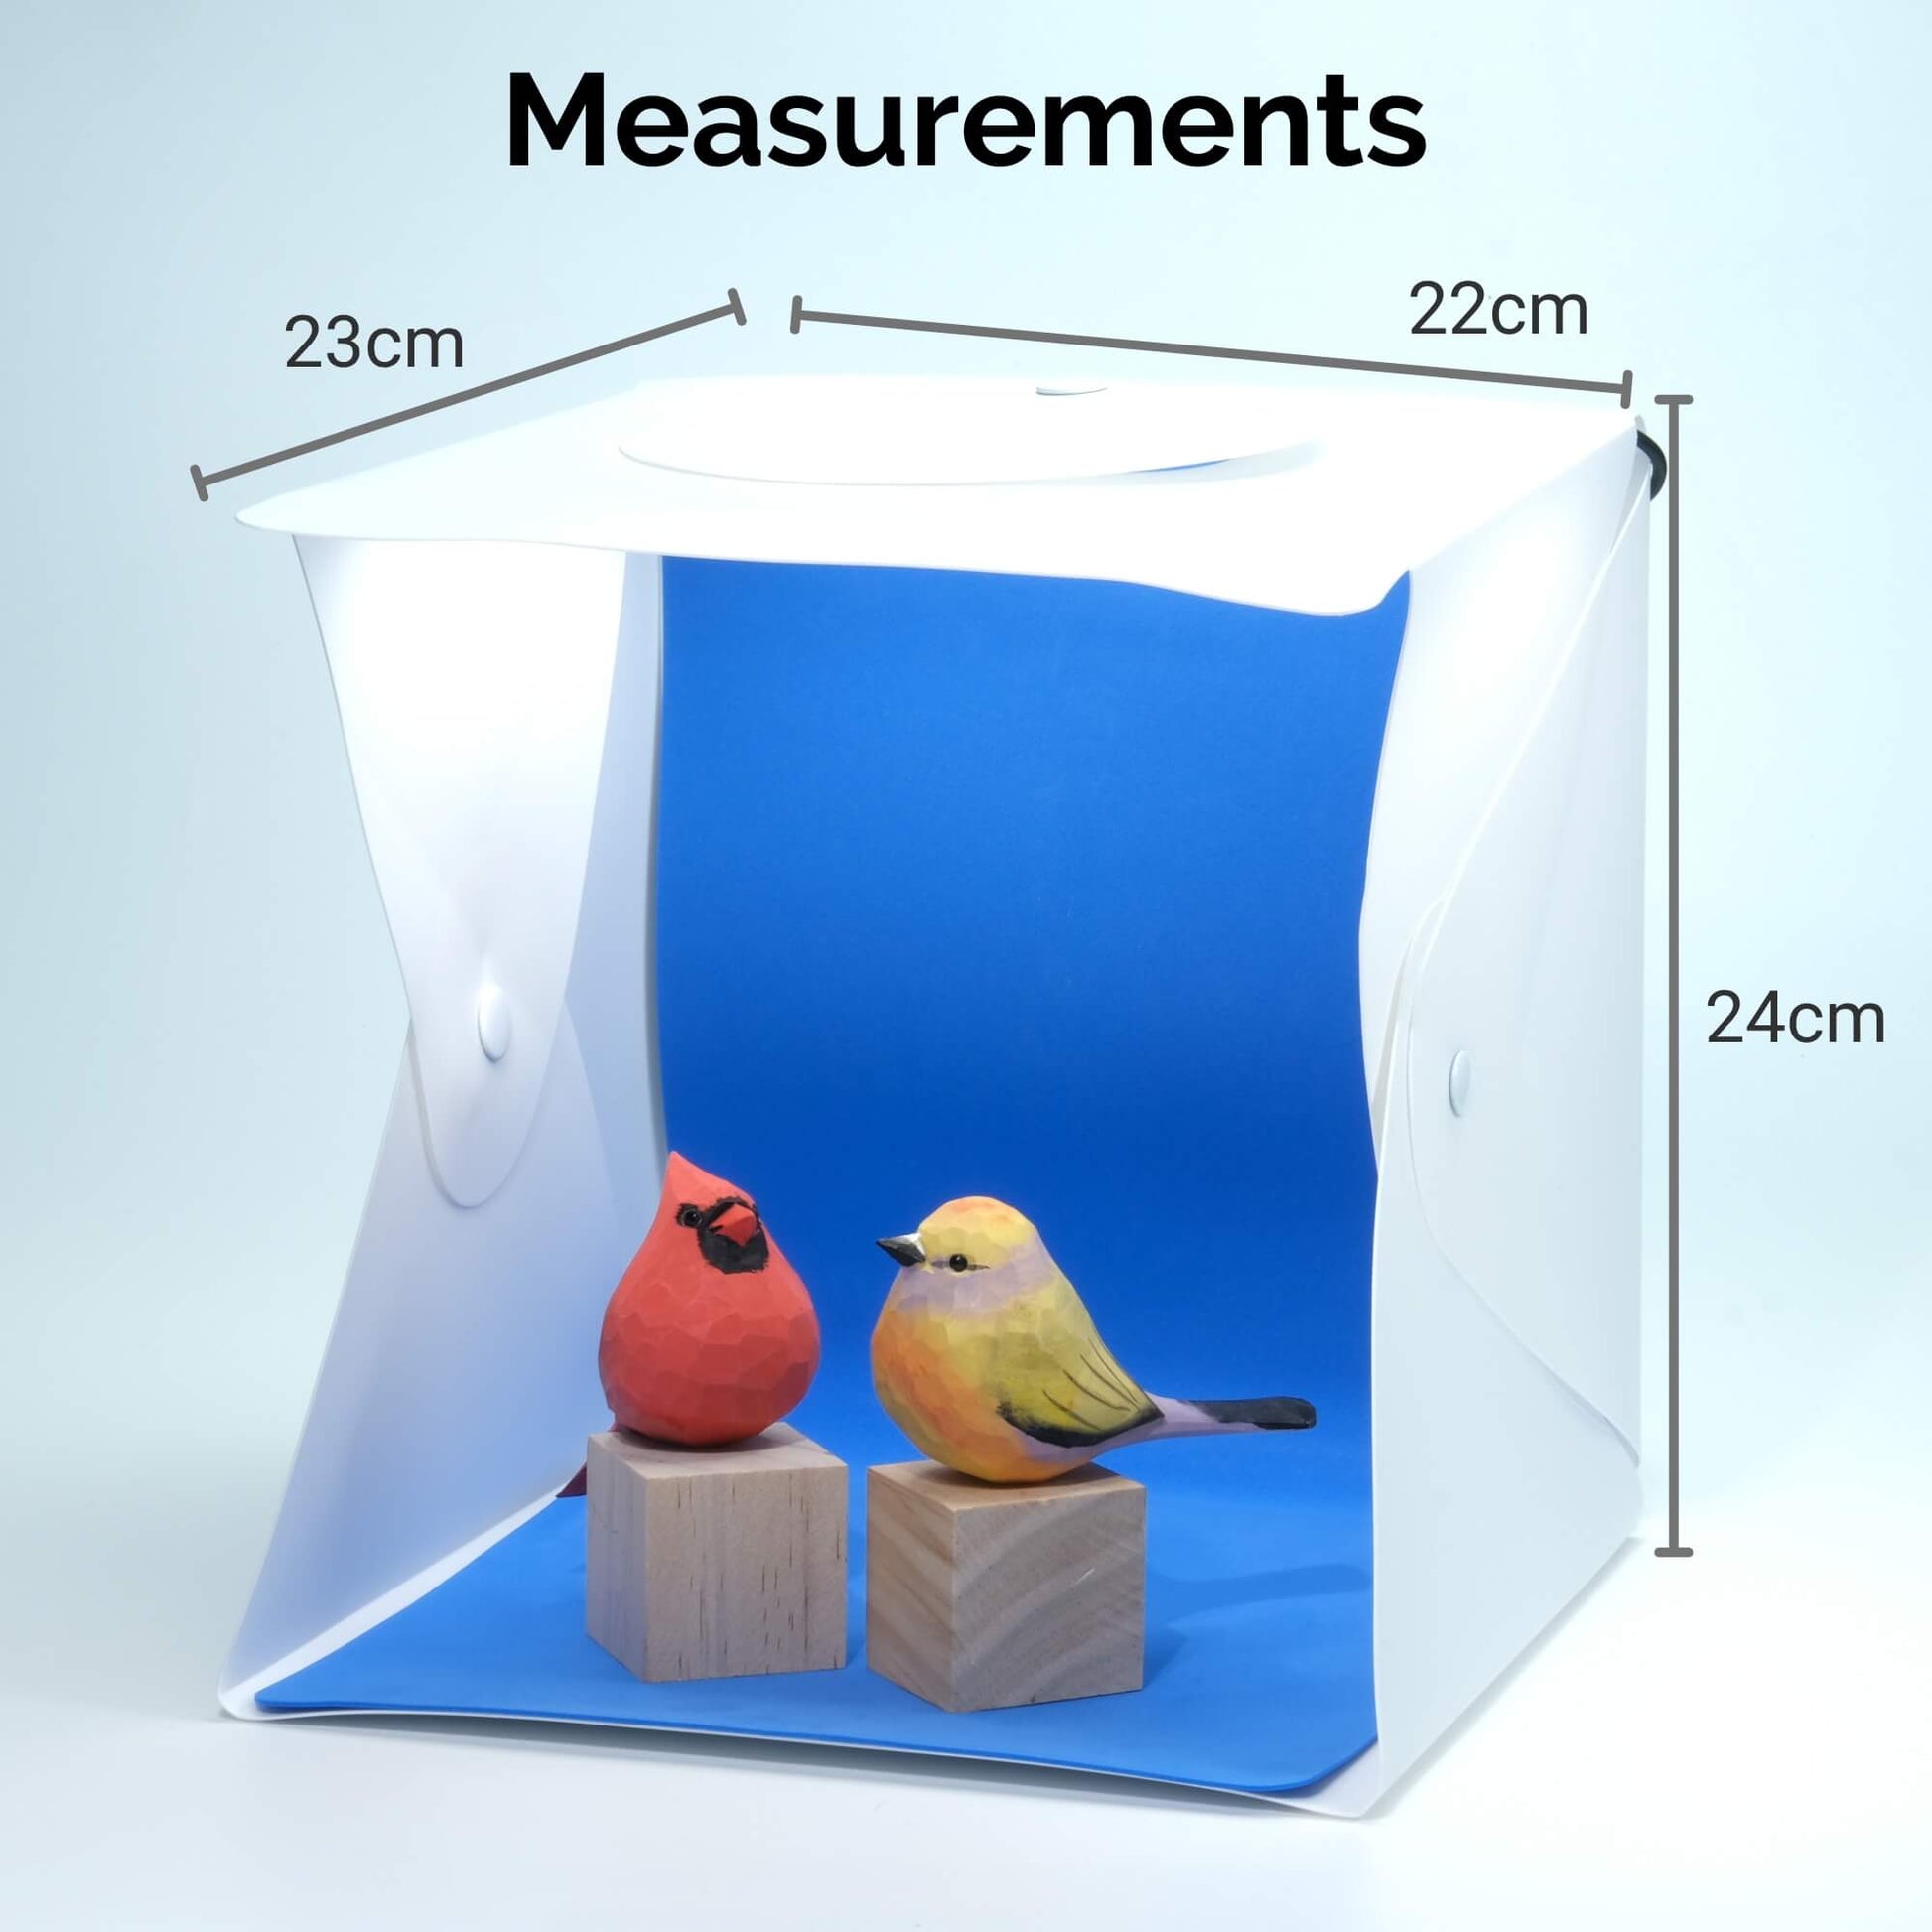 20cm Portable Home Studio Light Box For Products Measurements